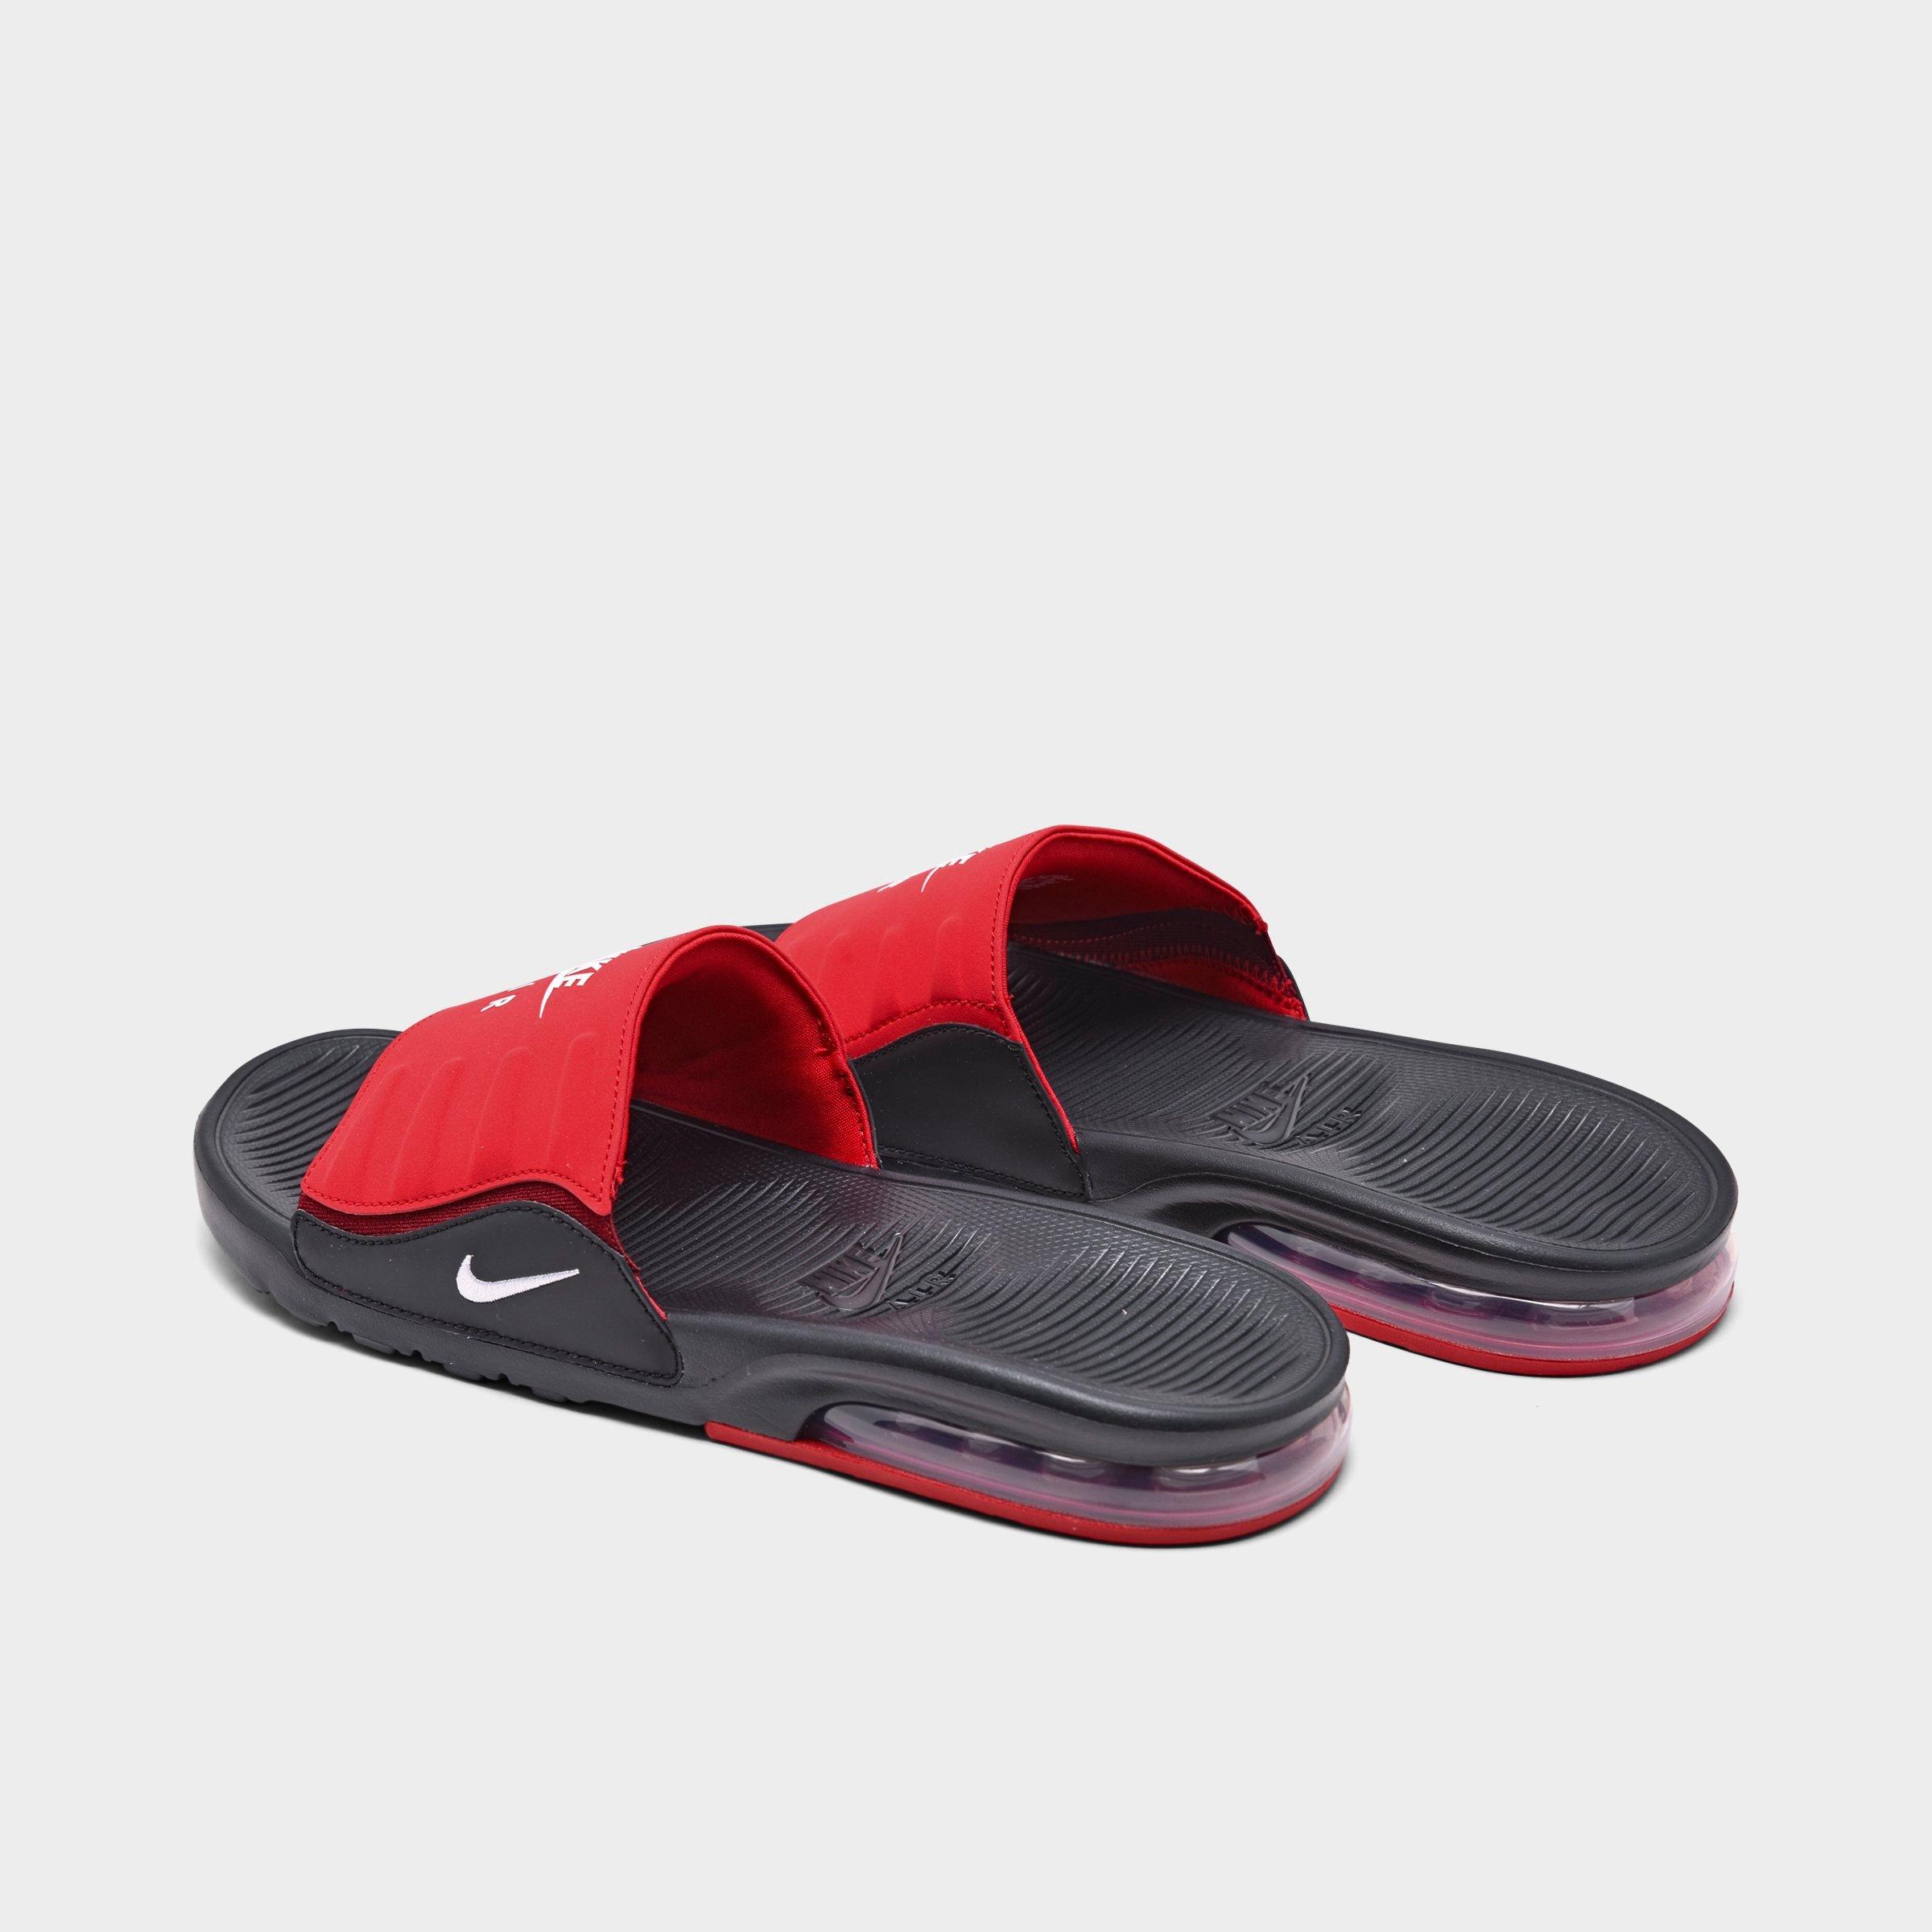 men's nike air max camden slide sandals from finish line